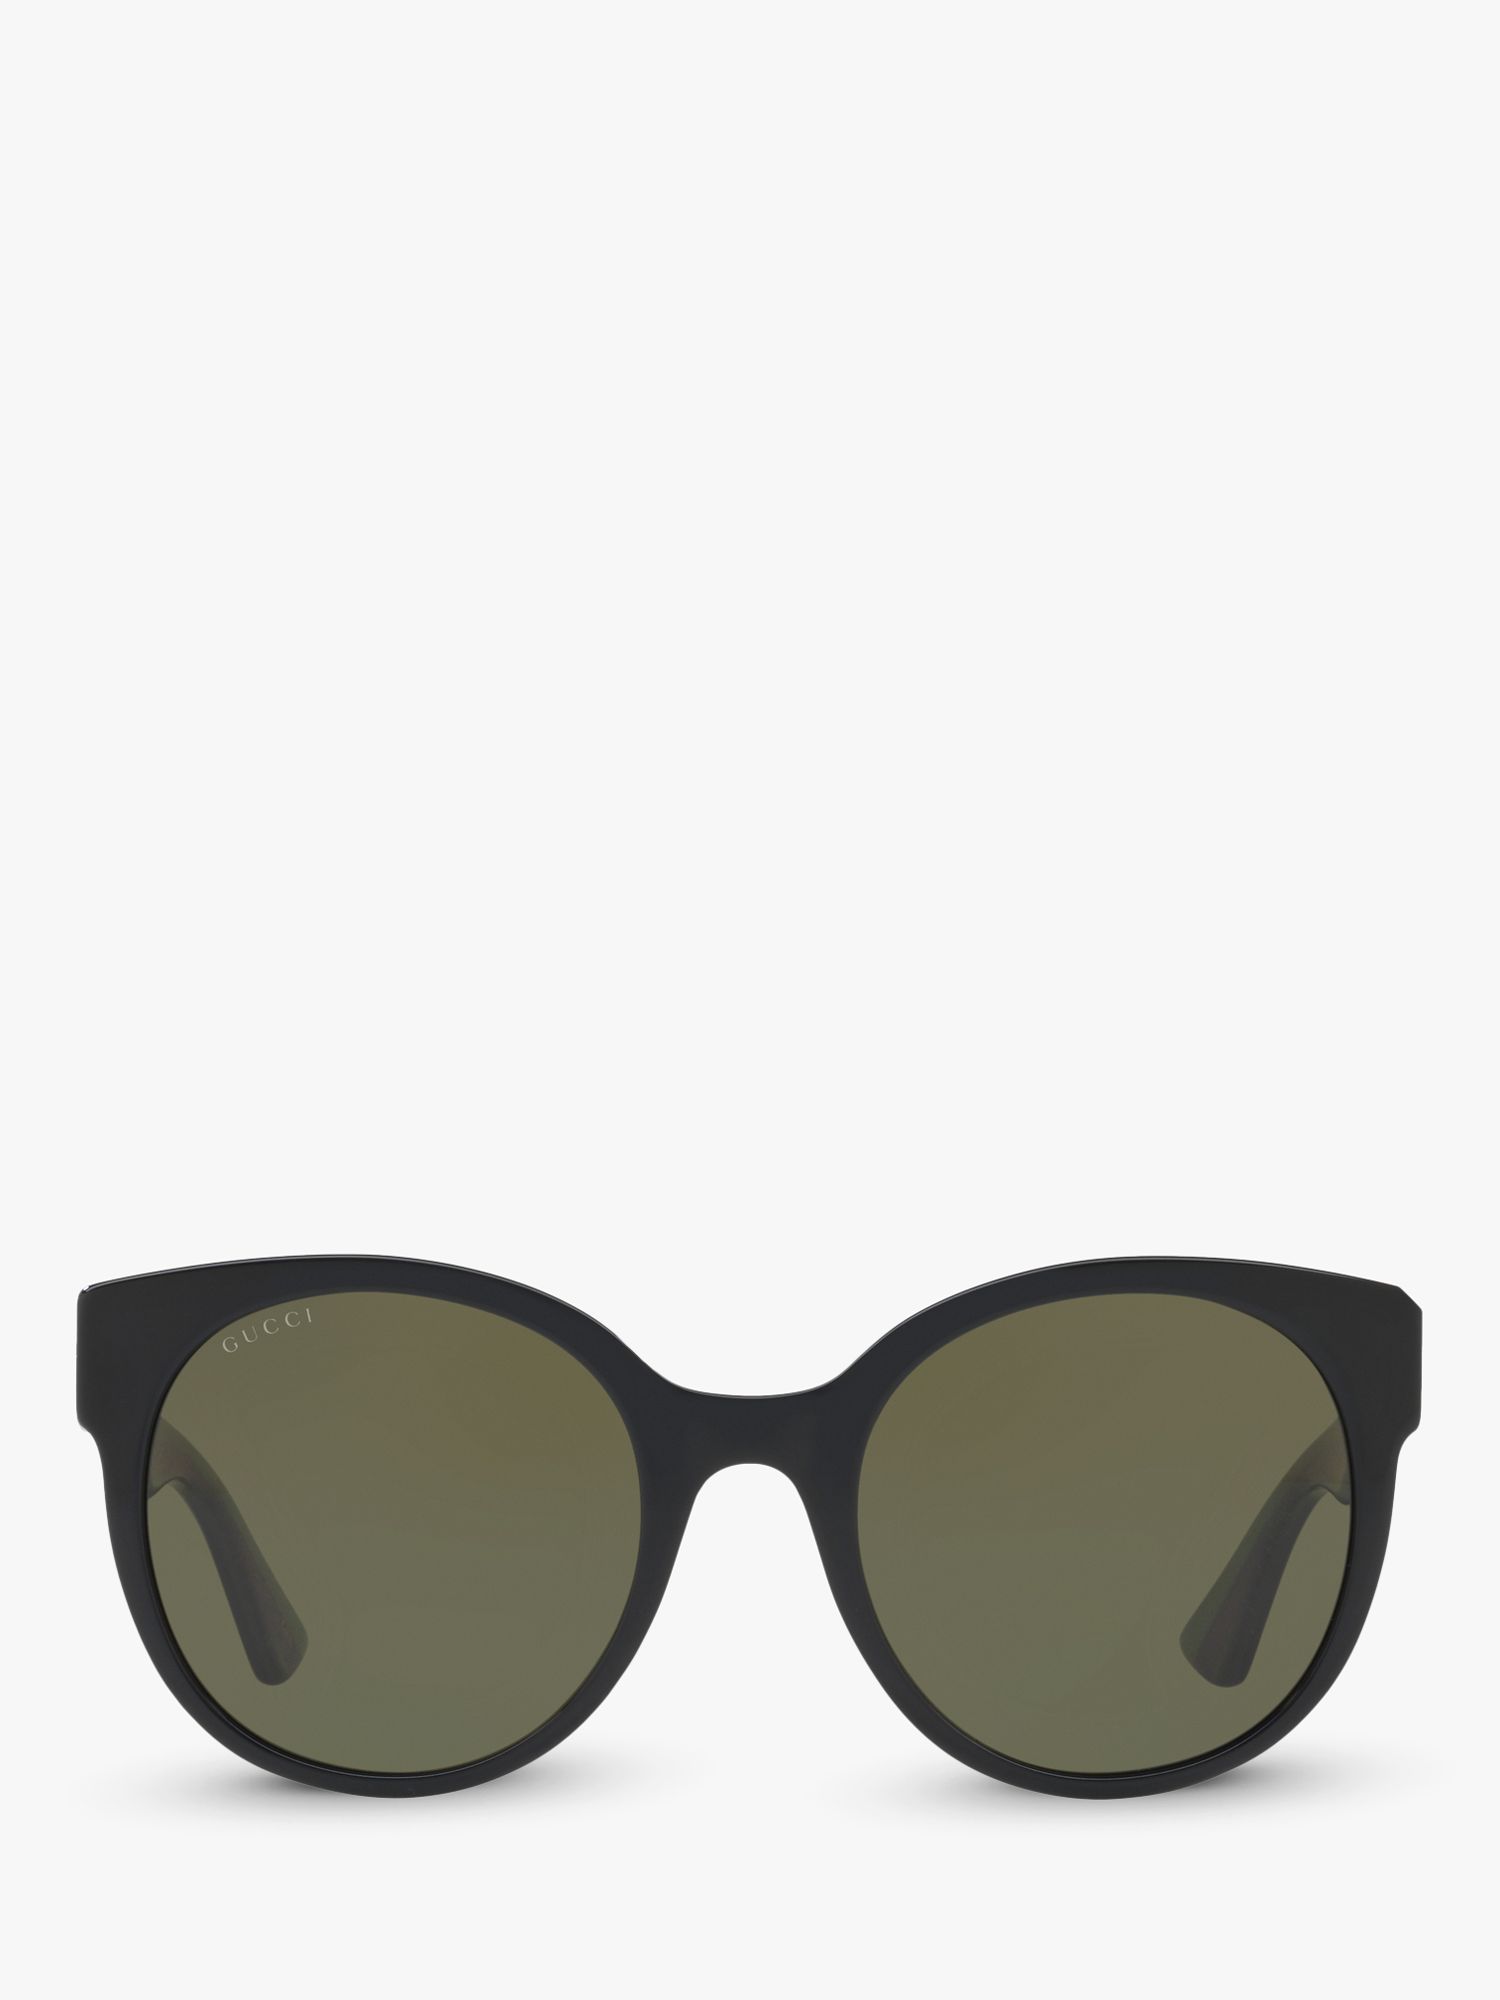 Gucci GG0035SN Women's Round Sunglasses, Black/Green at John Lewis ...